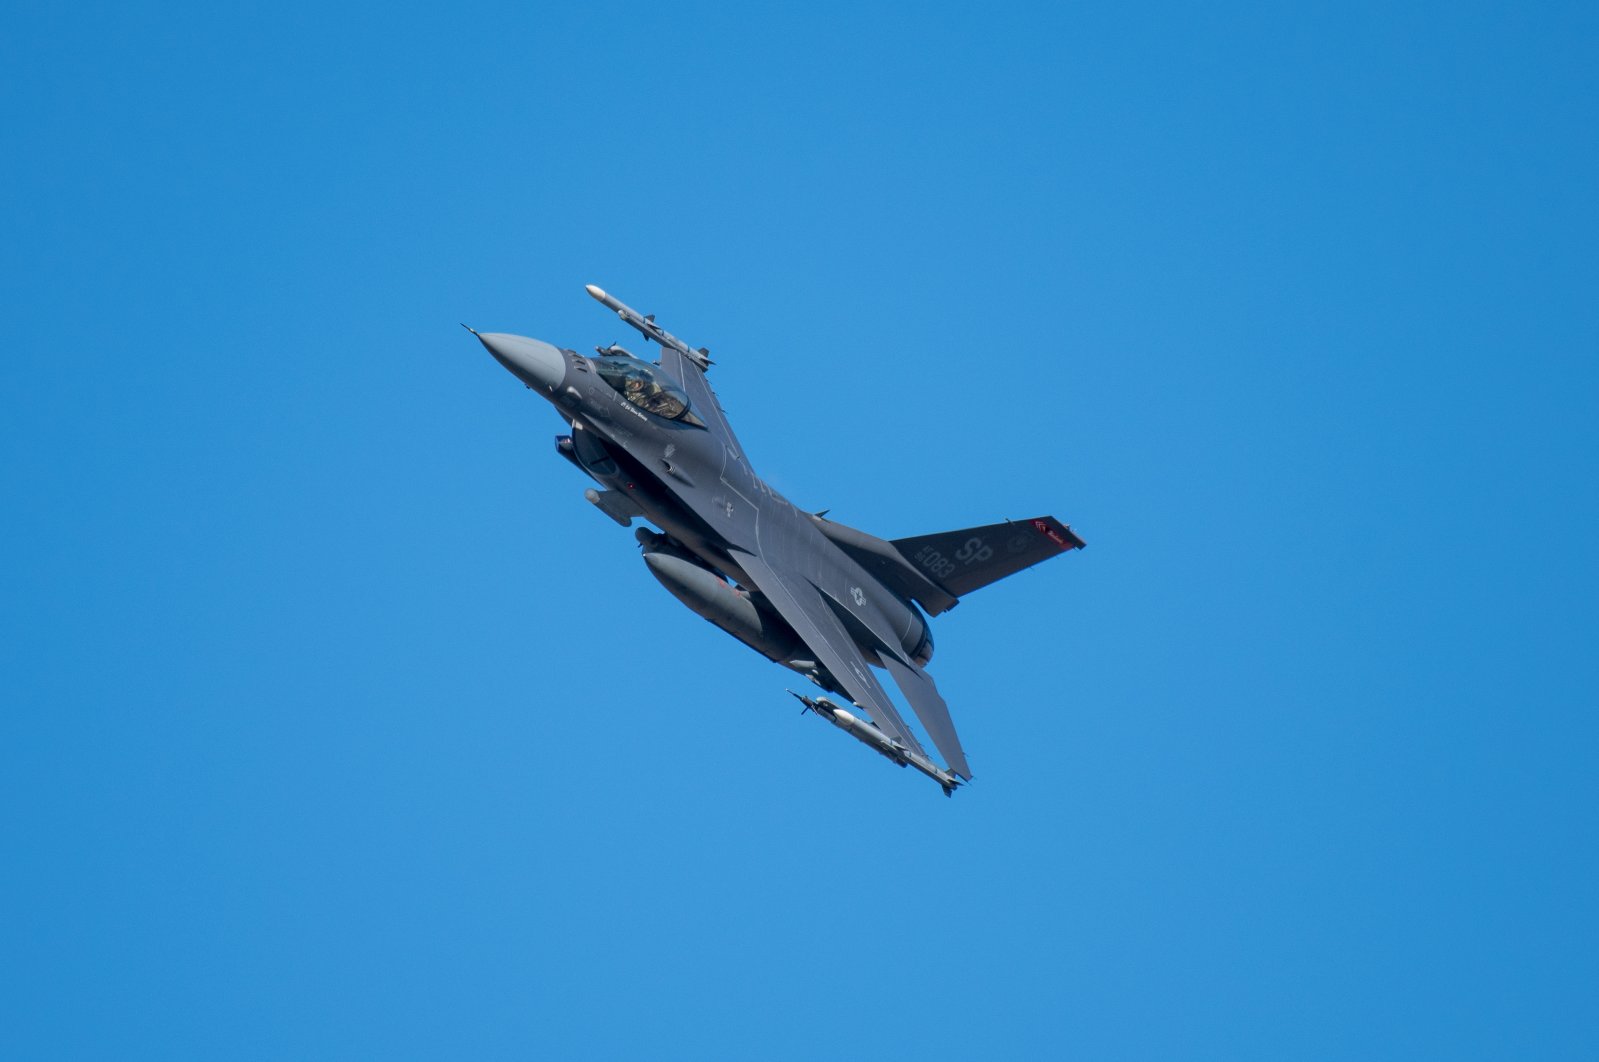 A U.S. F-16 fighter jet flies over the Eifel region near Spangdahlem, Germany, Feb. 23, 2022. (Reuters Photo)